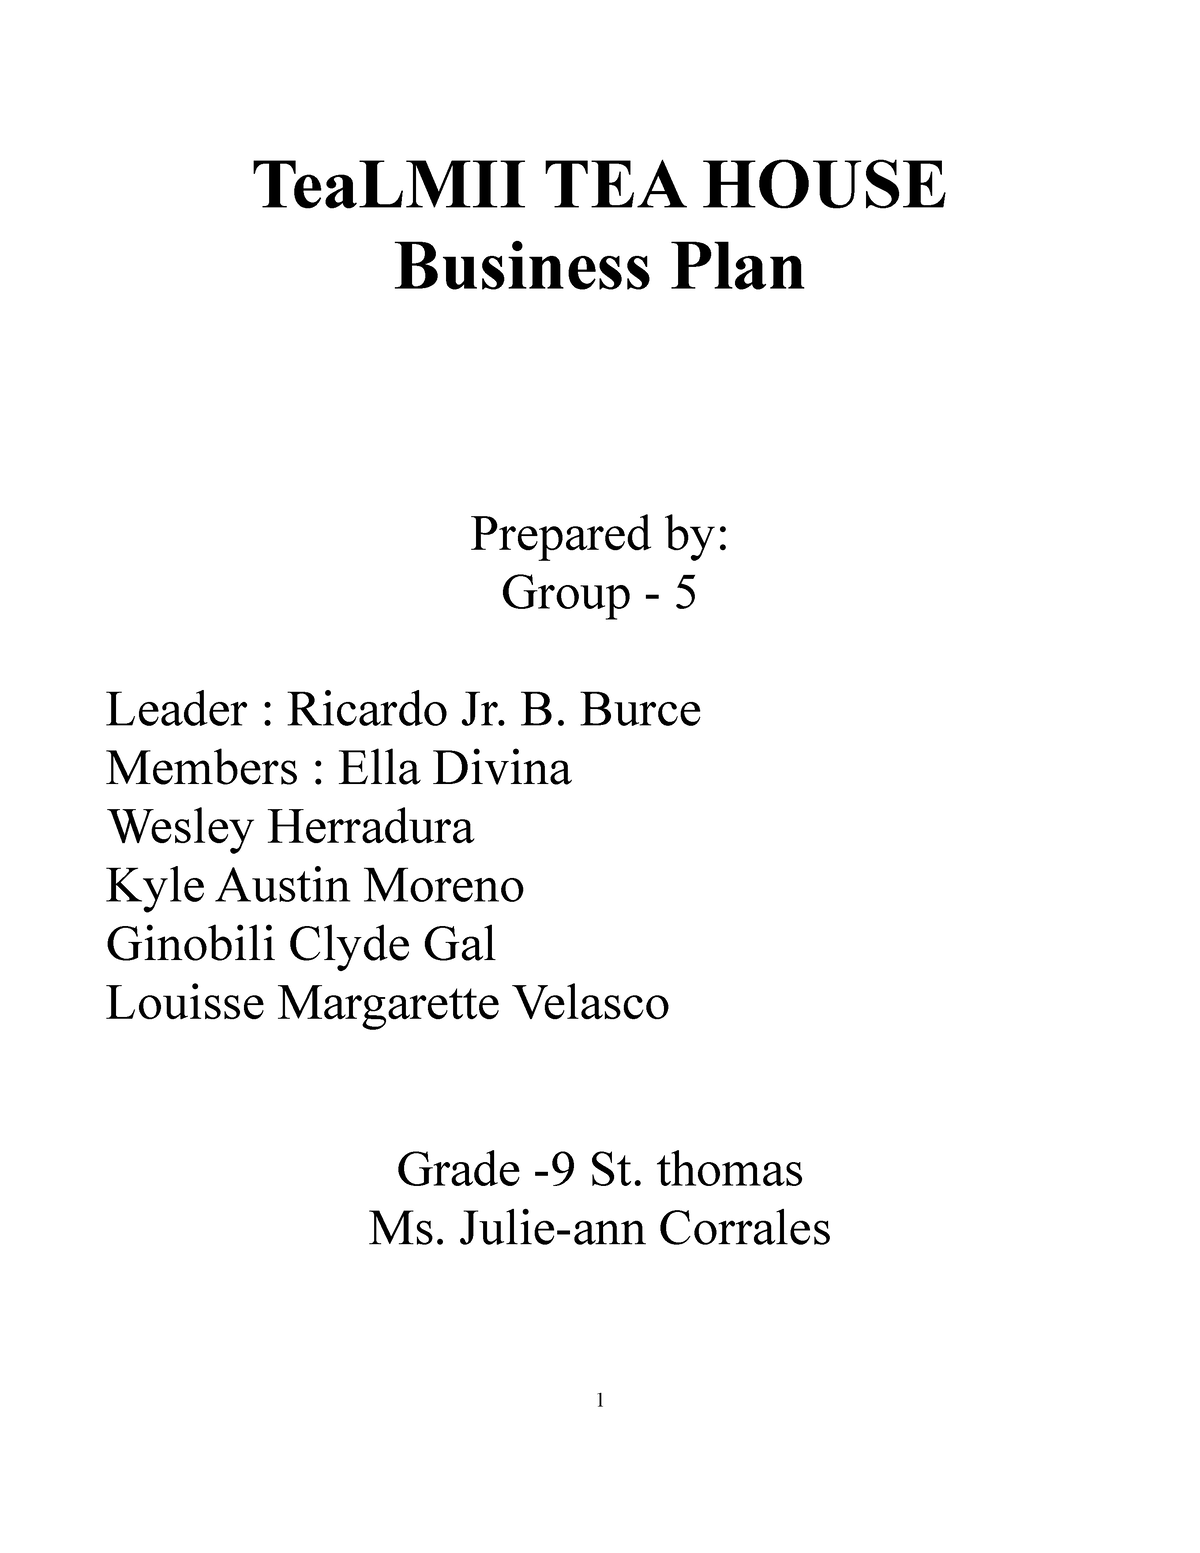 tea house business plan pdf